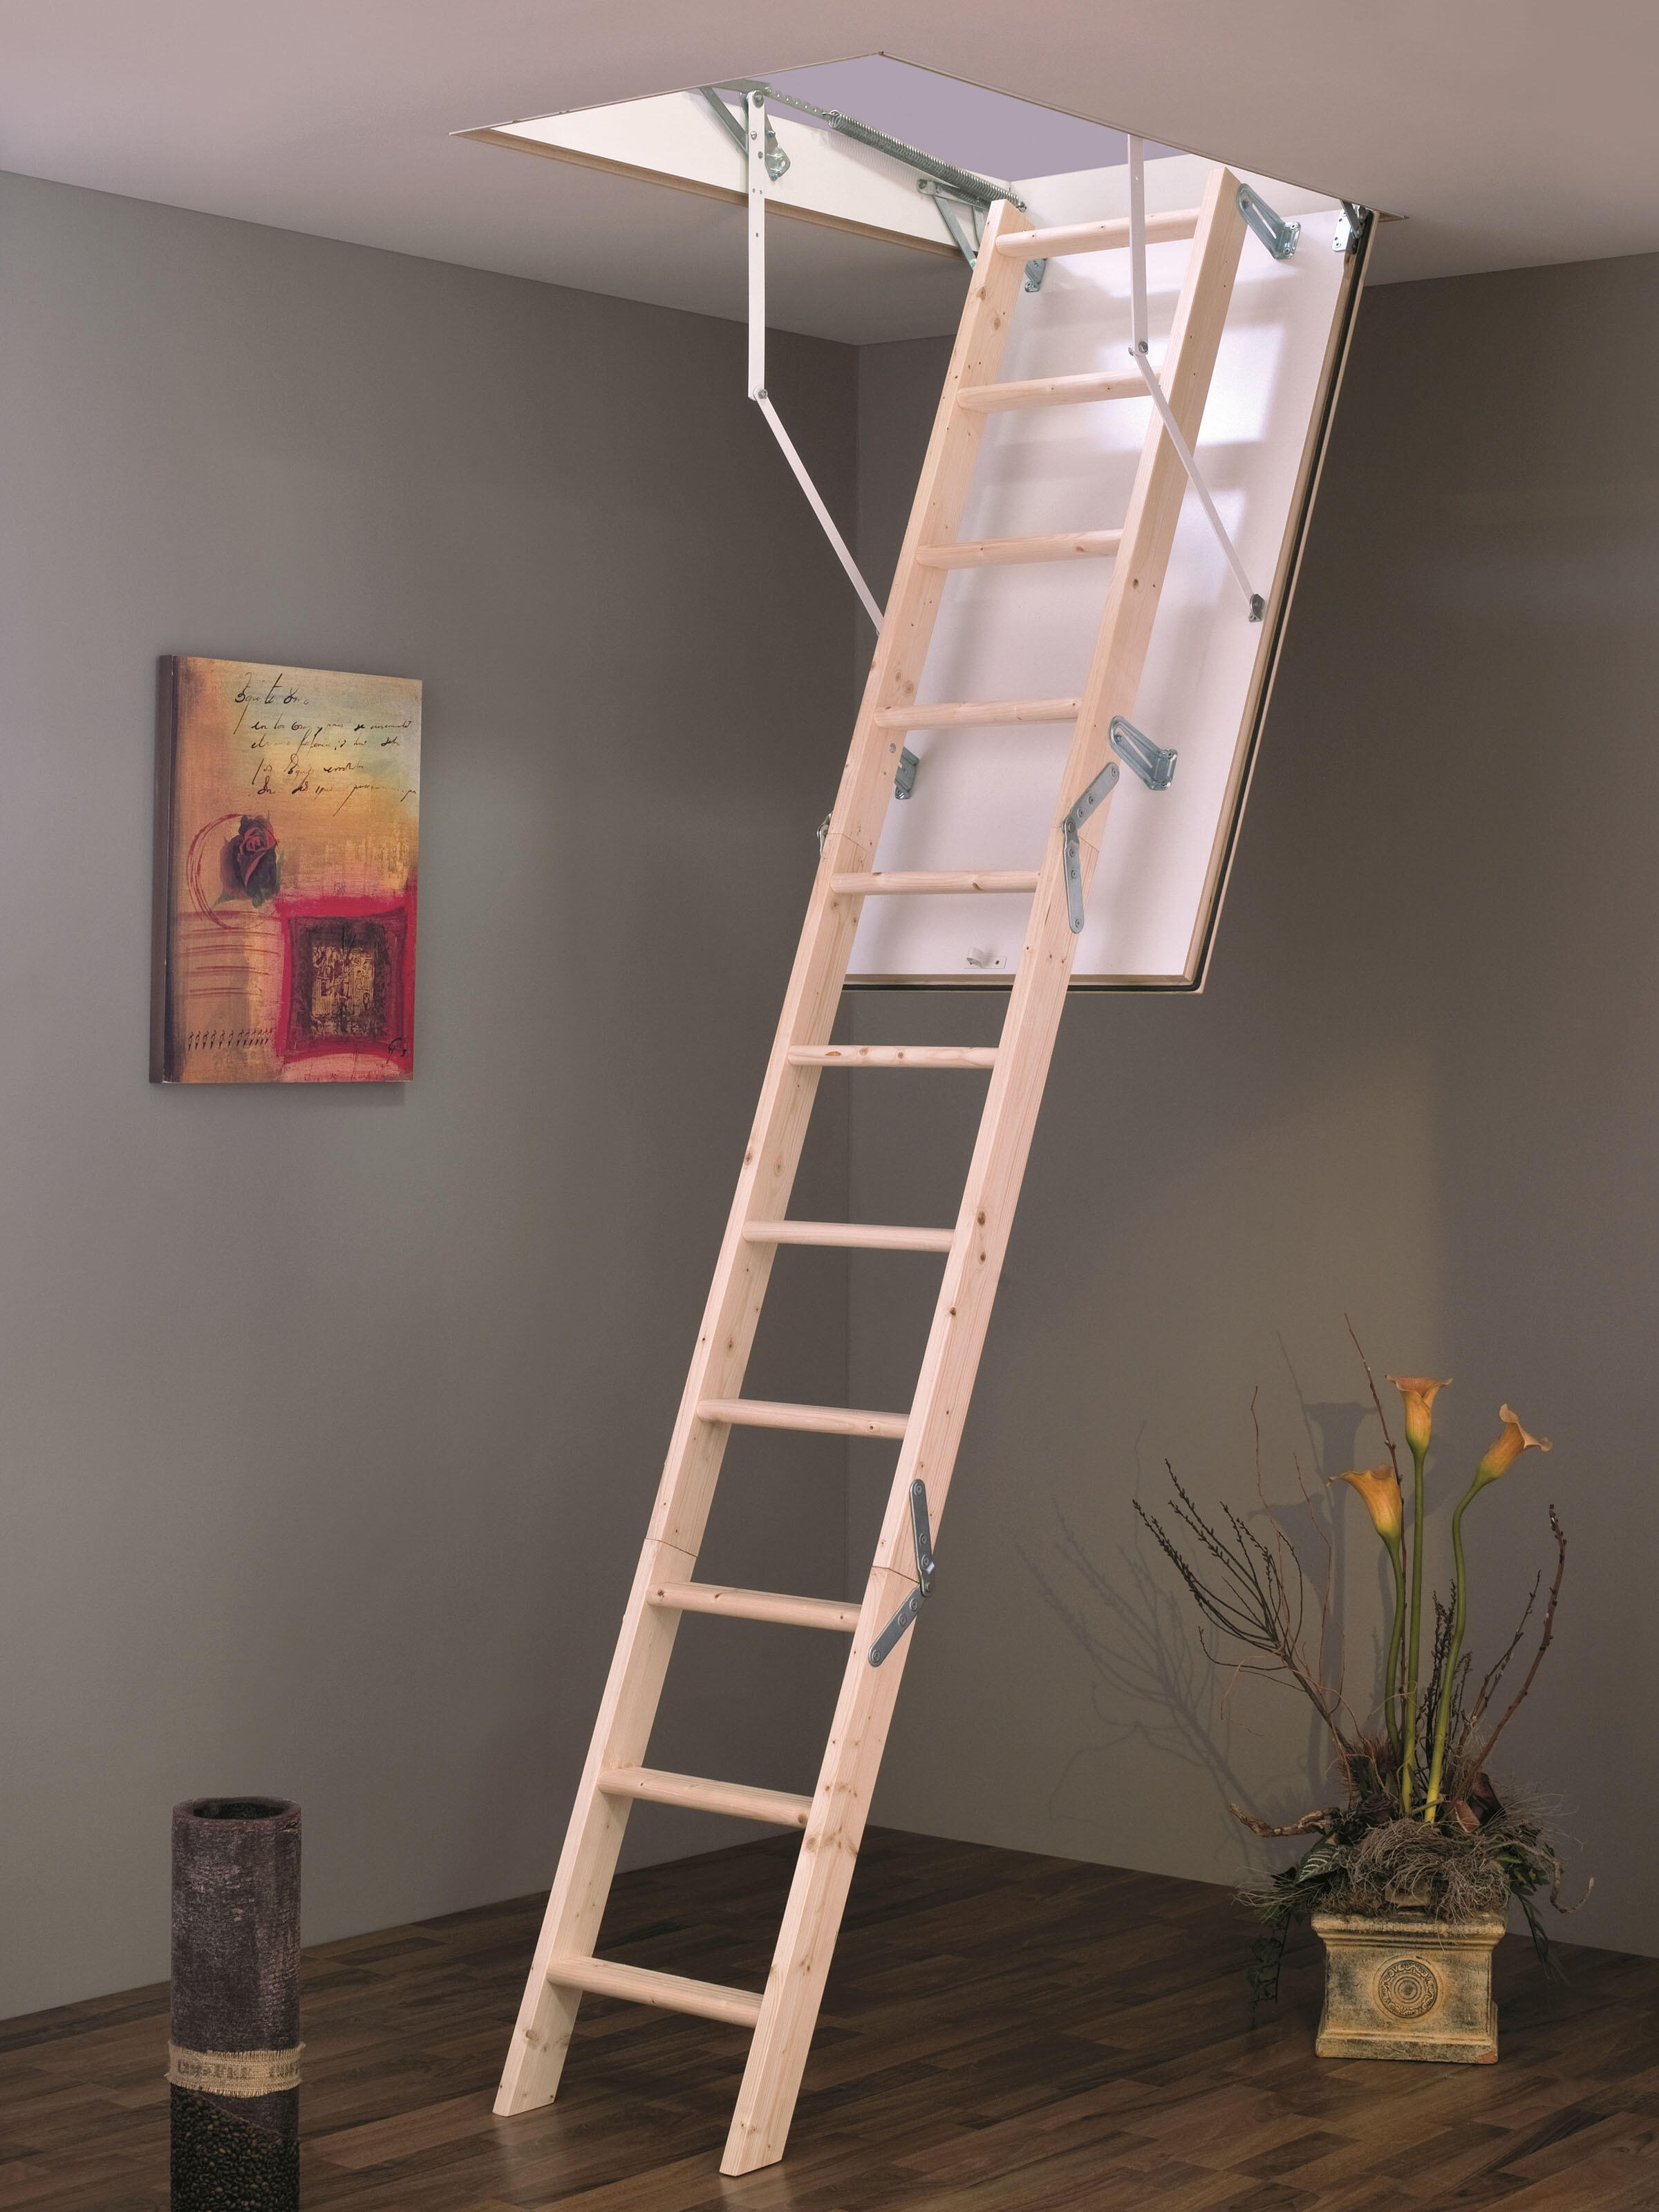 Escalera escamoteable isowood 140x70cm